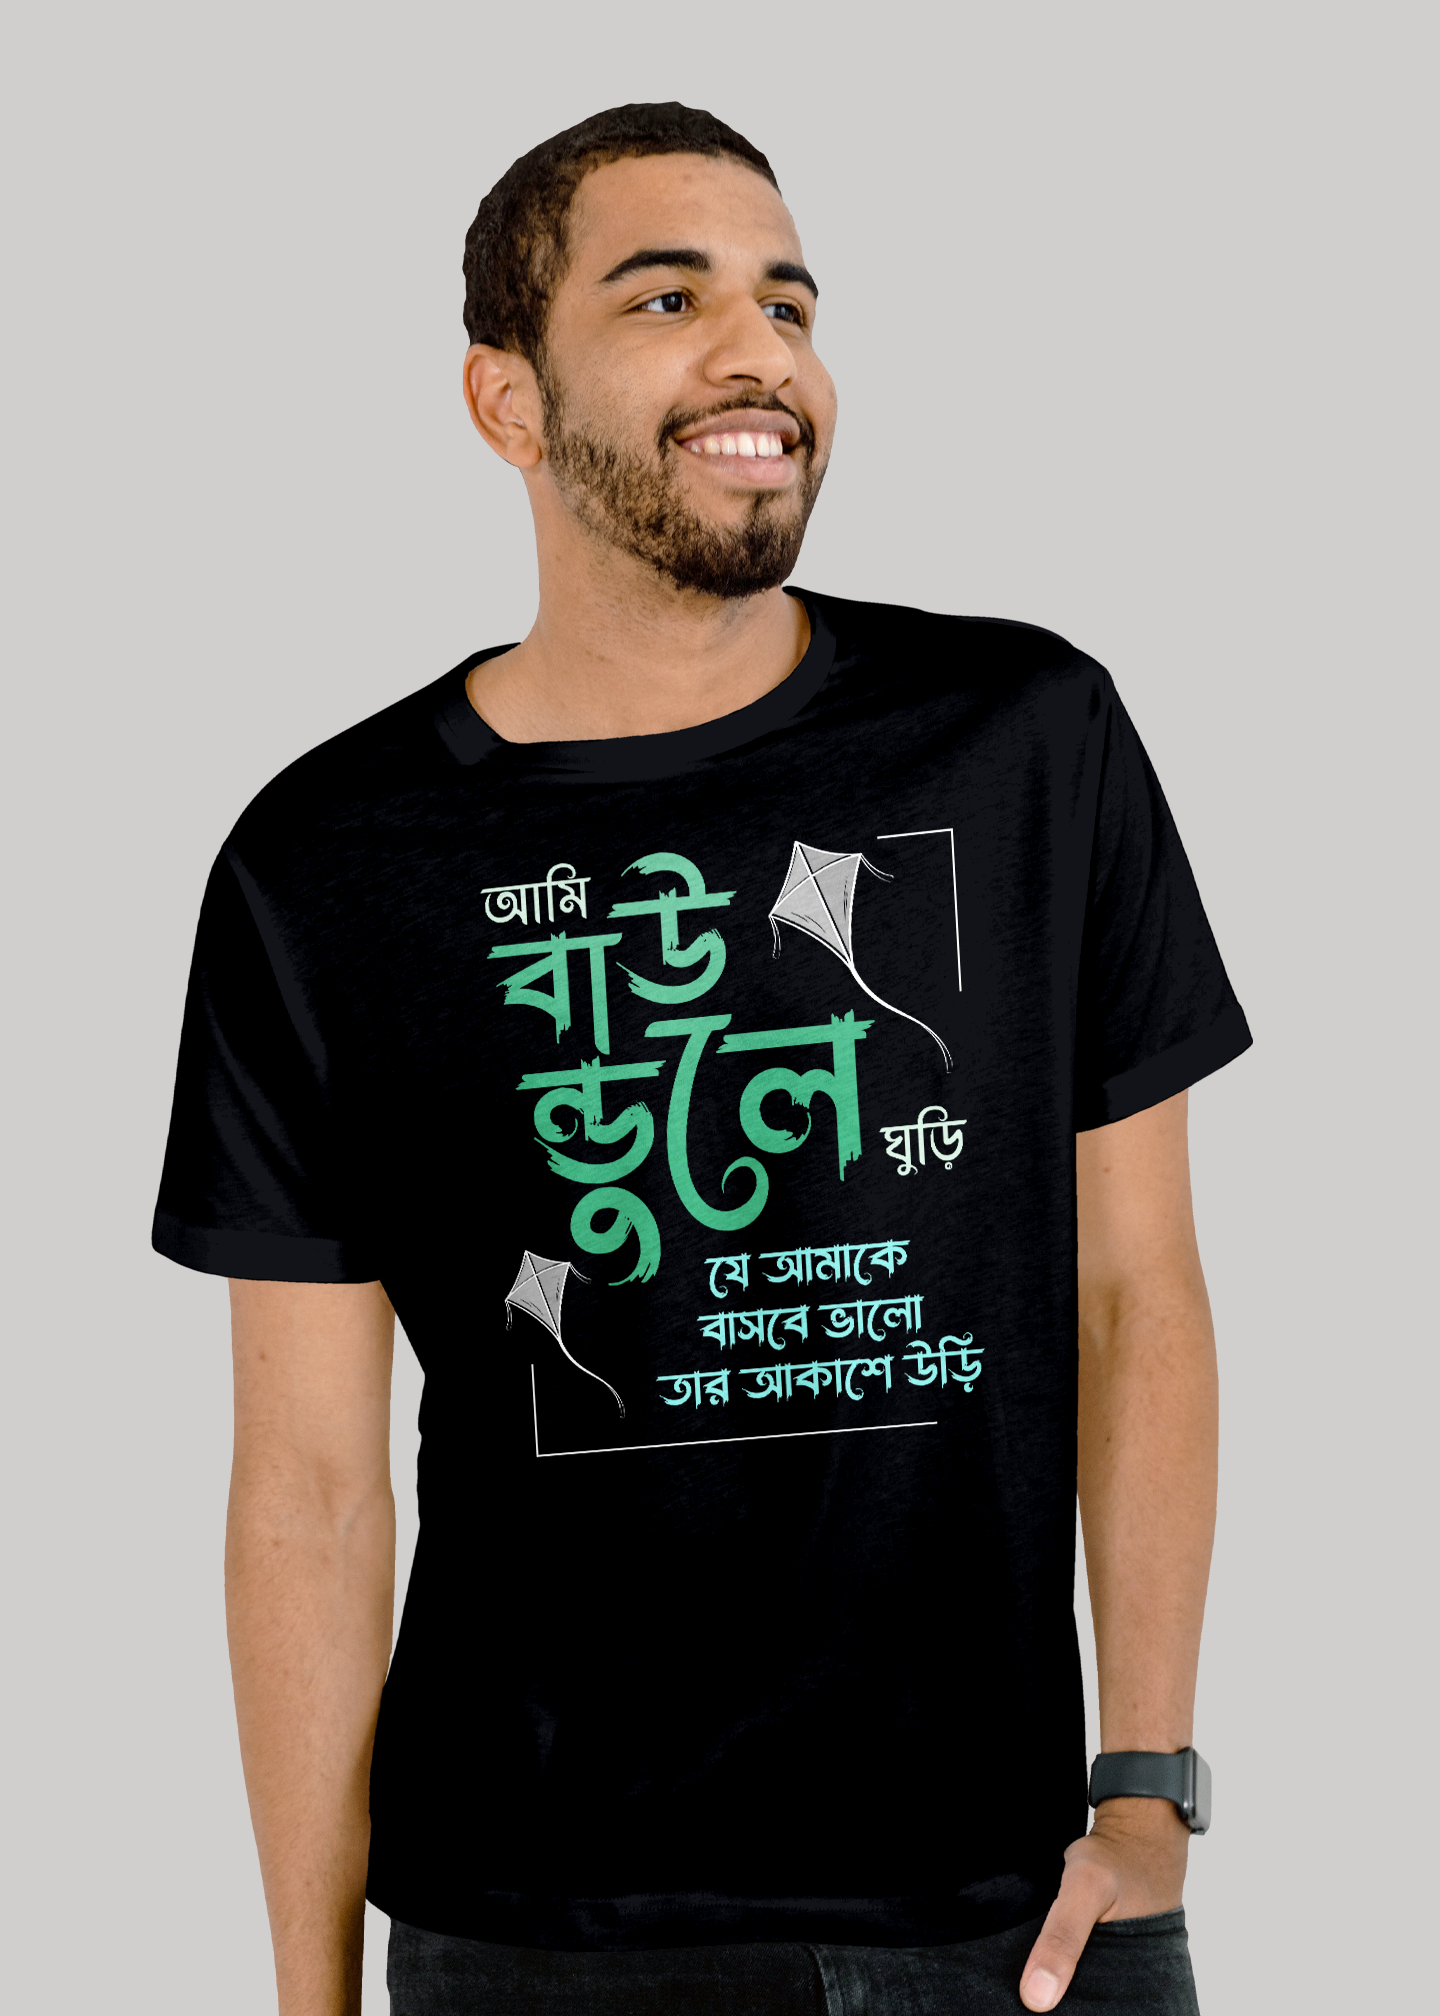 Ami baundule ghuri bengali Printed Half Sleeve Premium Cotton T-shirt For Men